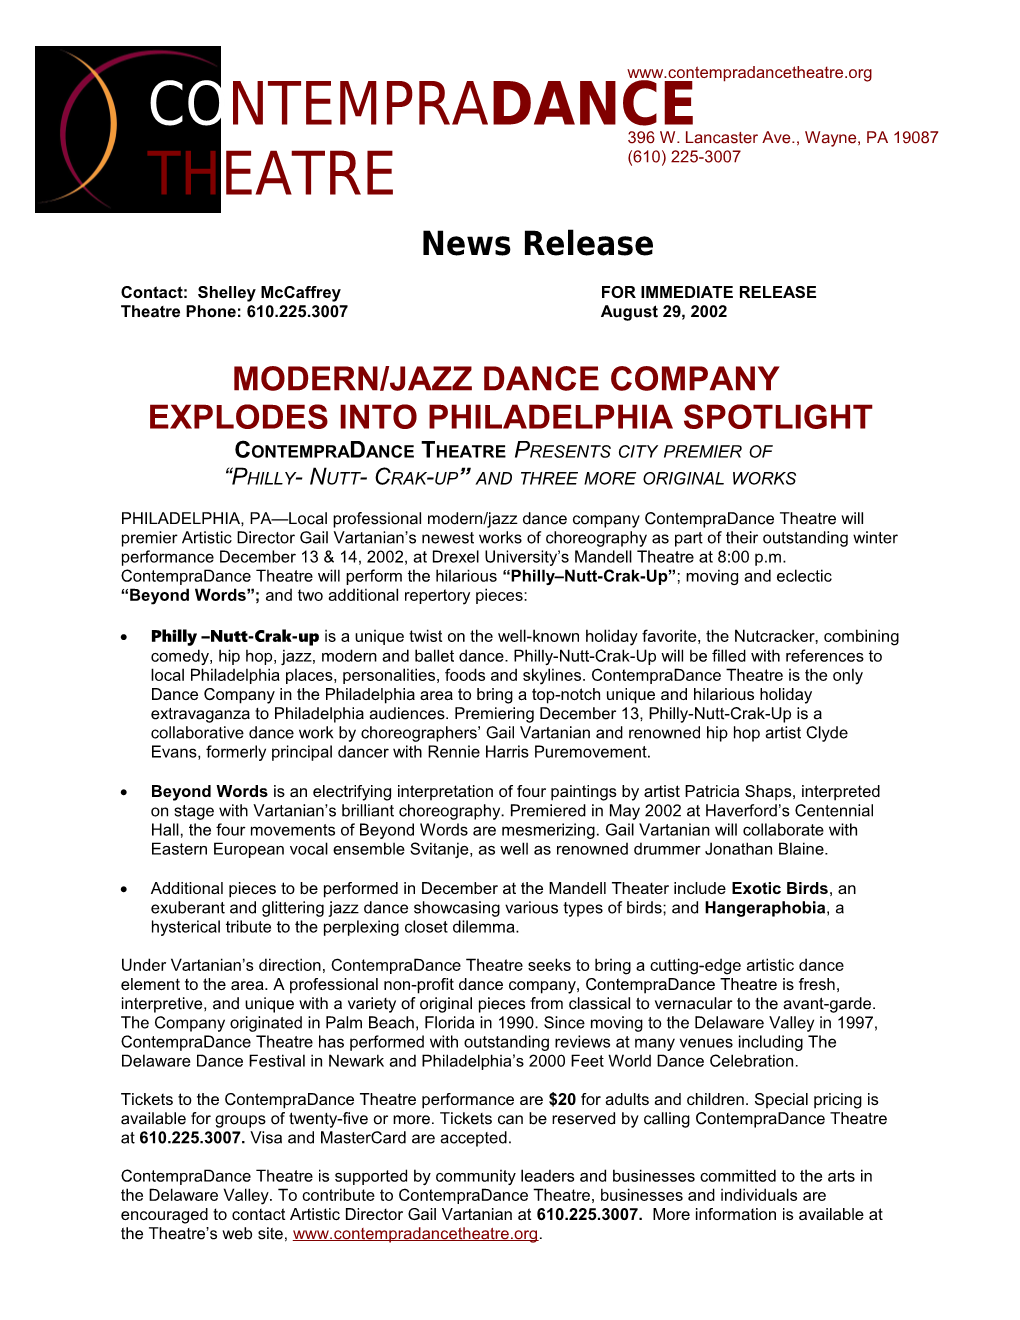 Contempradance Theatre, (CDT), Originating in Palm Beach, Florida, Was Formed in 1990 By